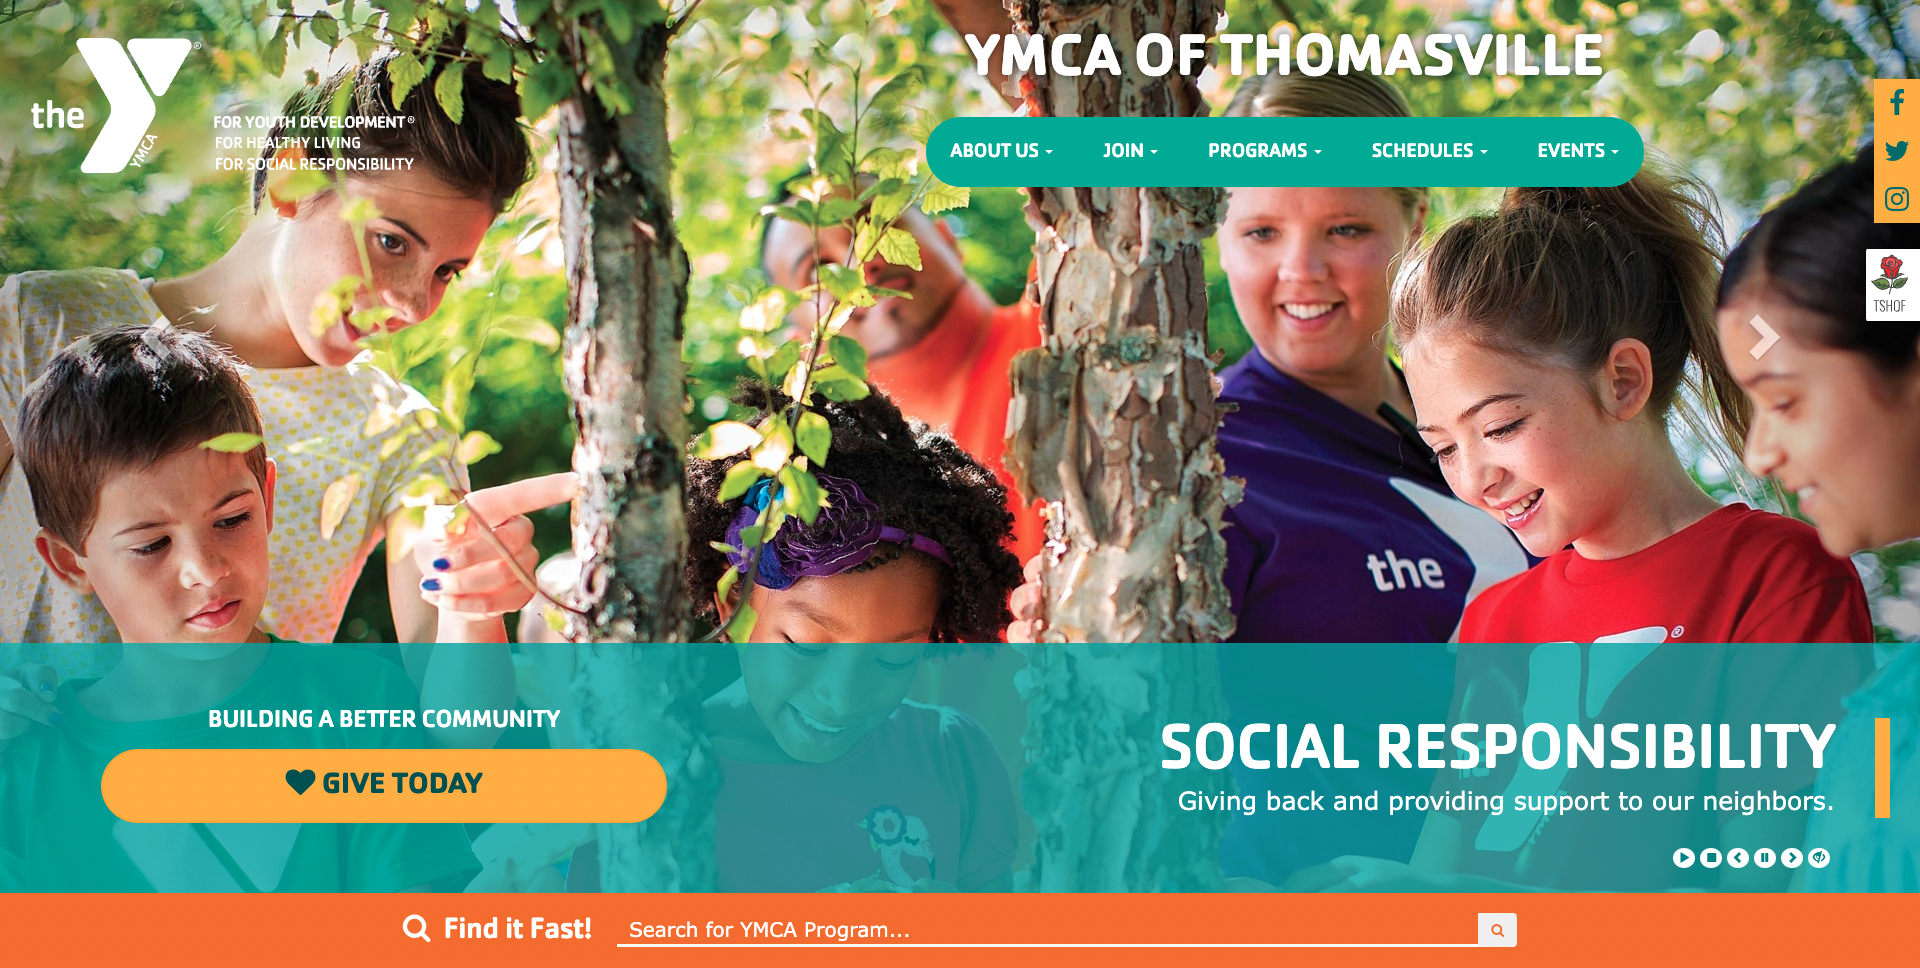 YMCA of Thomasville